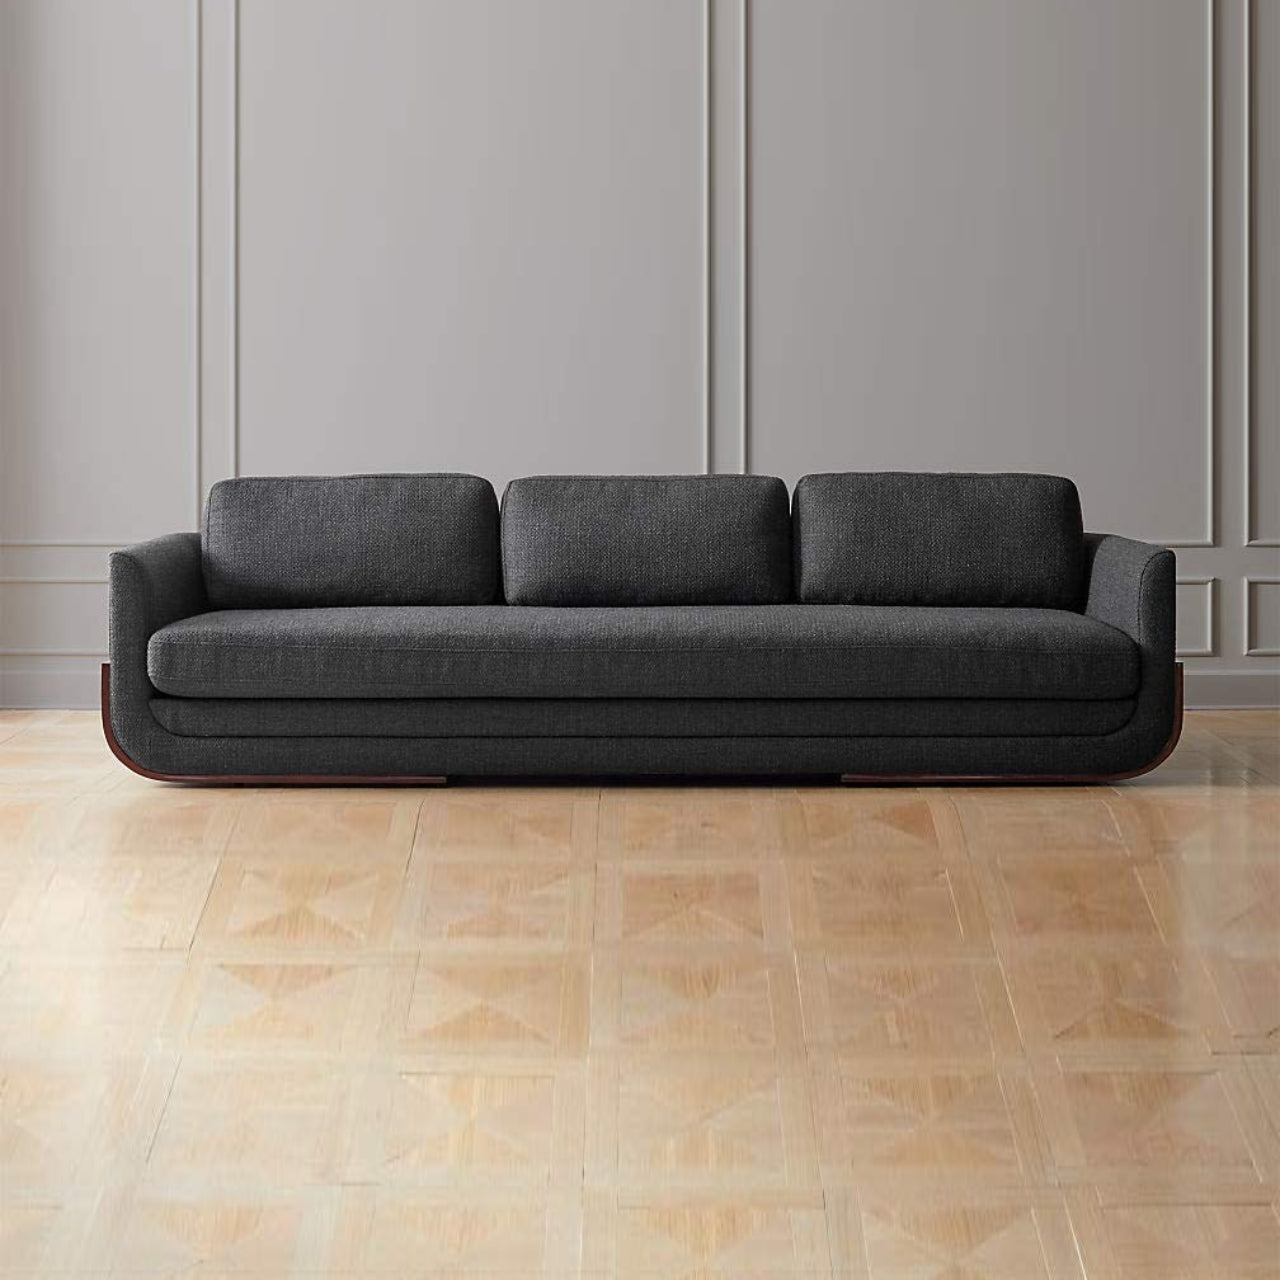 3 Seater sofa Set-Fabric Sofa Set (Charcoal Grey)